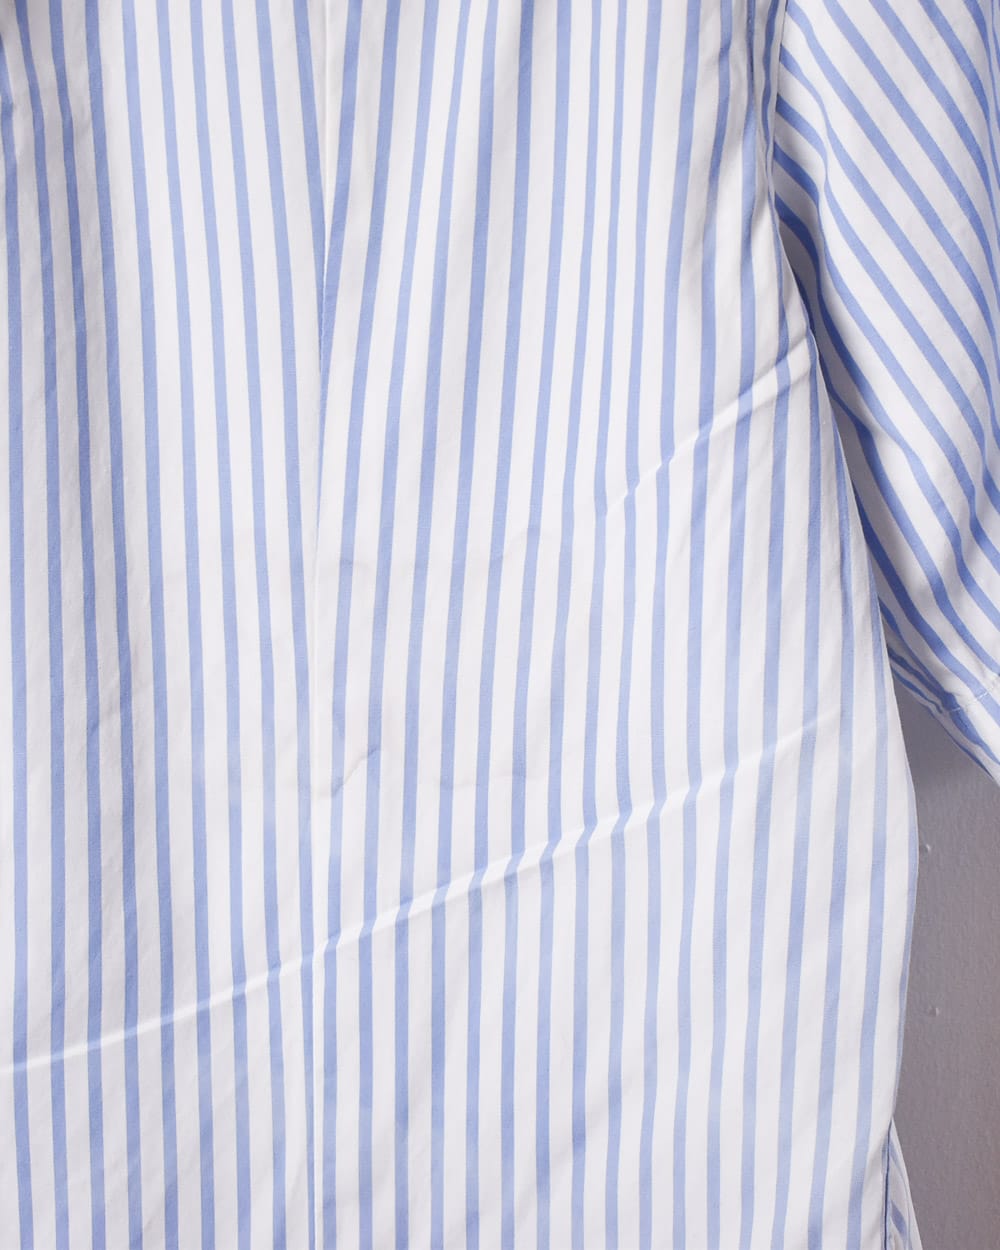 Blue Polo Ralph Lauren Striped Short Sleeved Shirt - X-Large